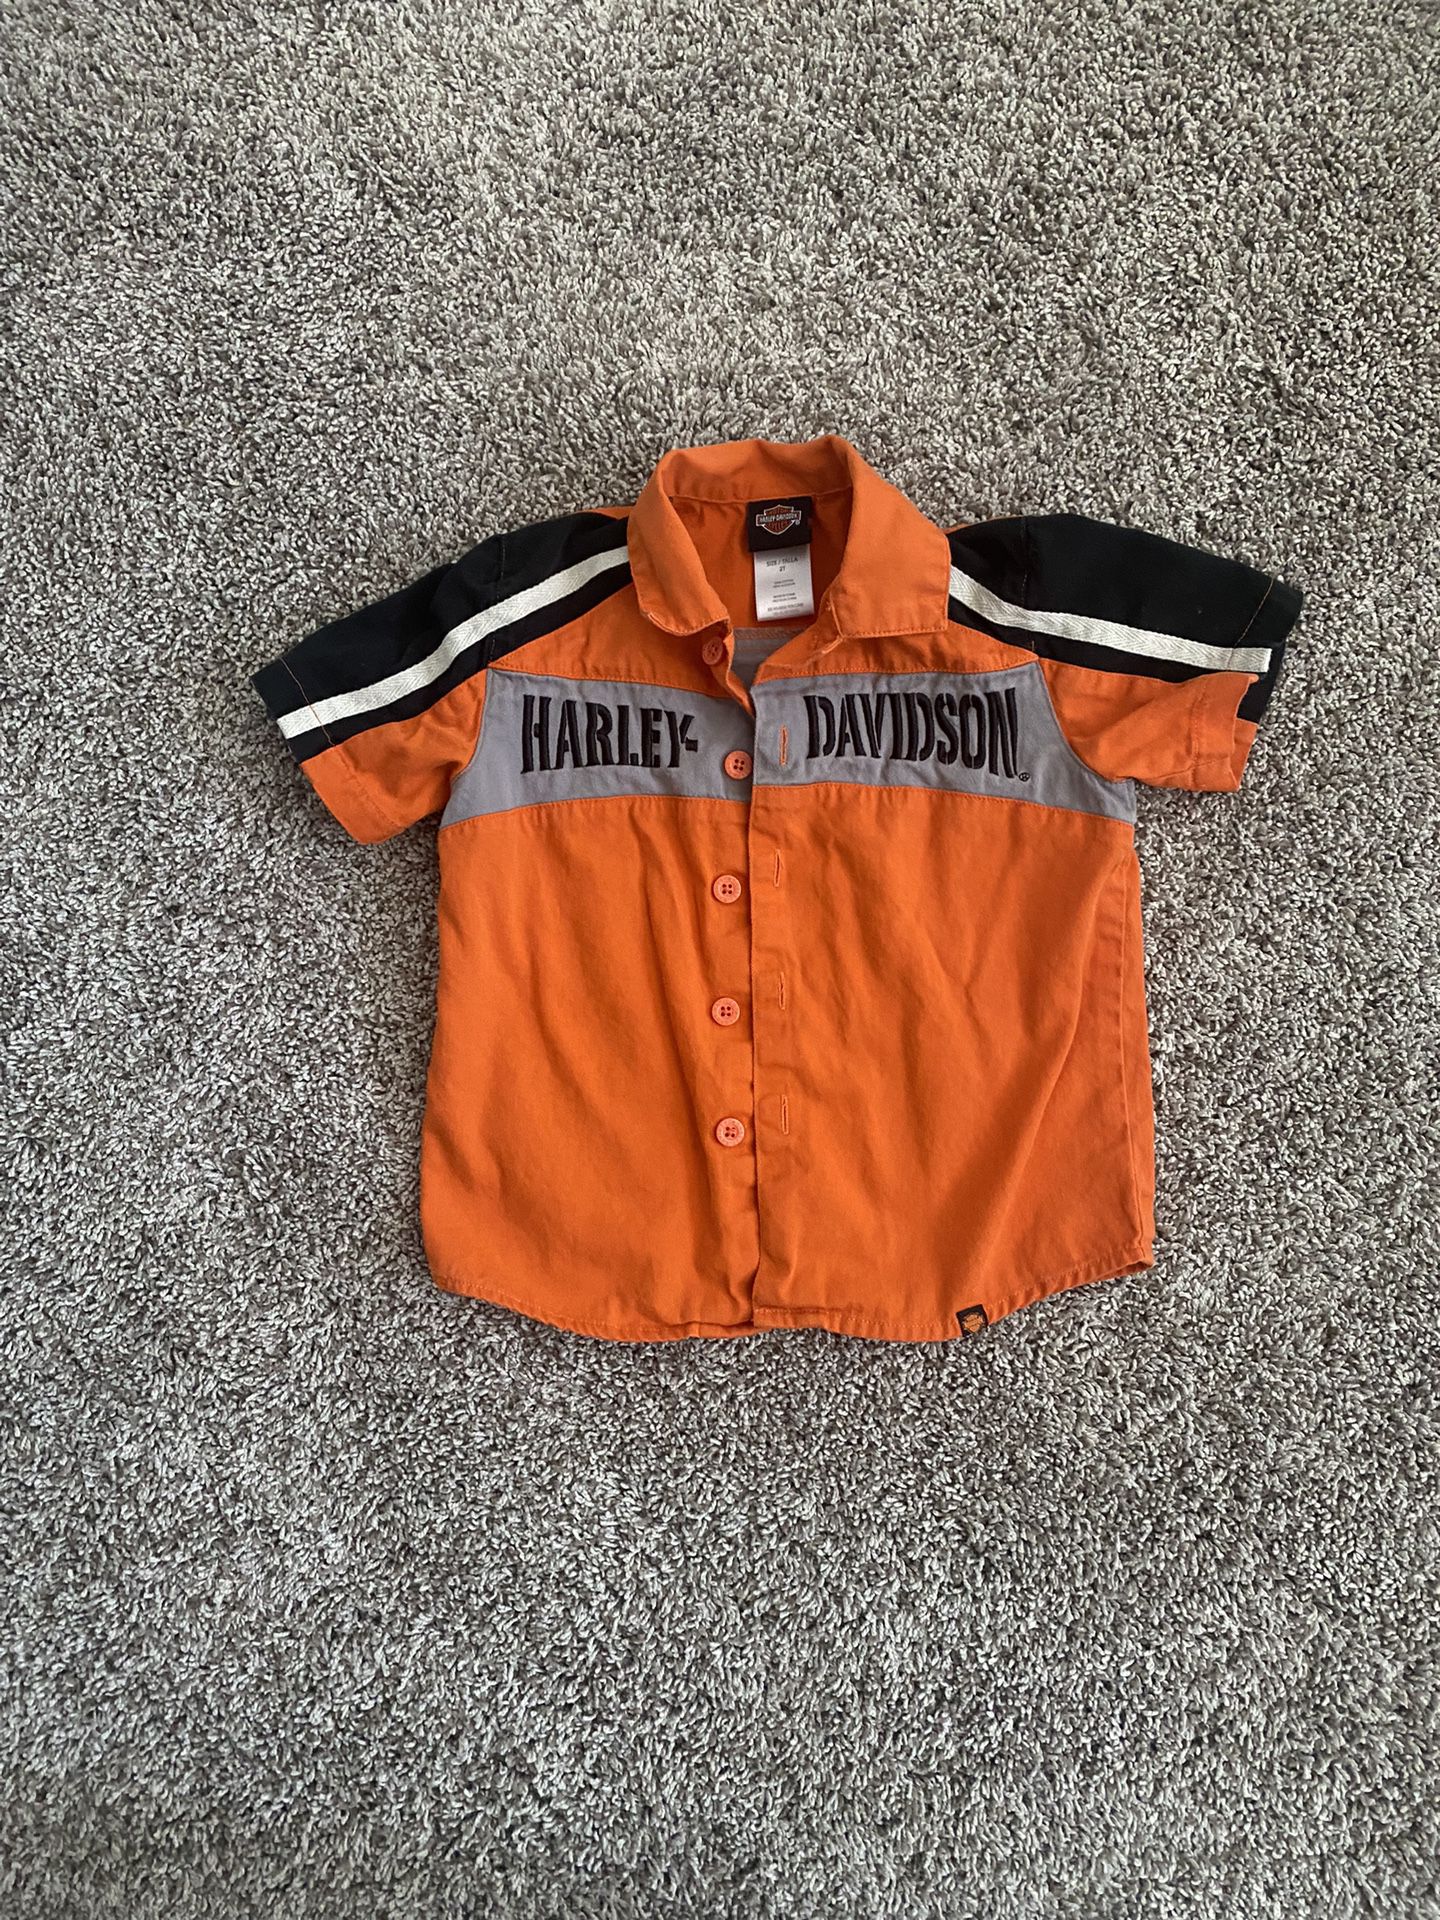 Harley-Davidson Button Up Shirt 2T